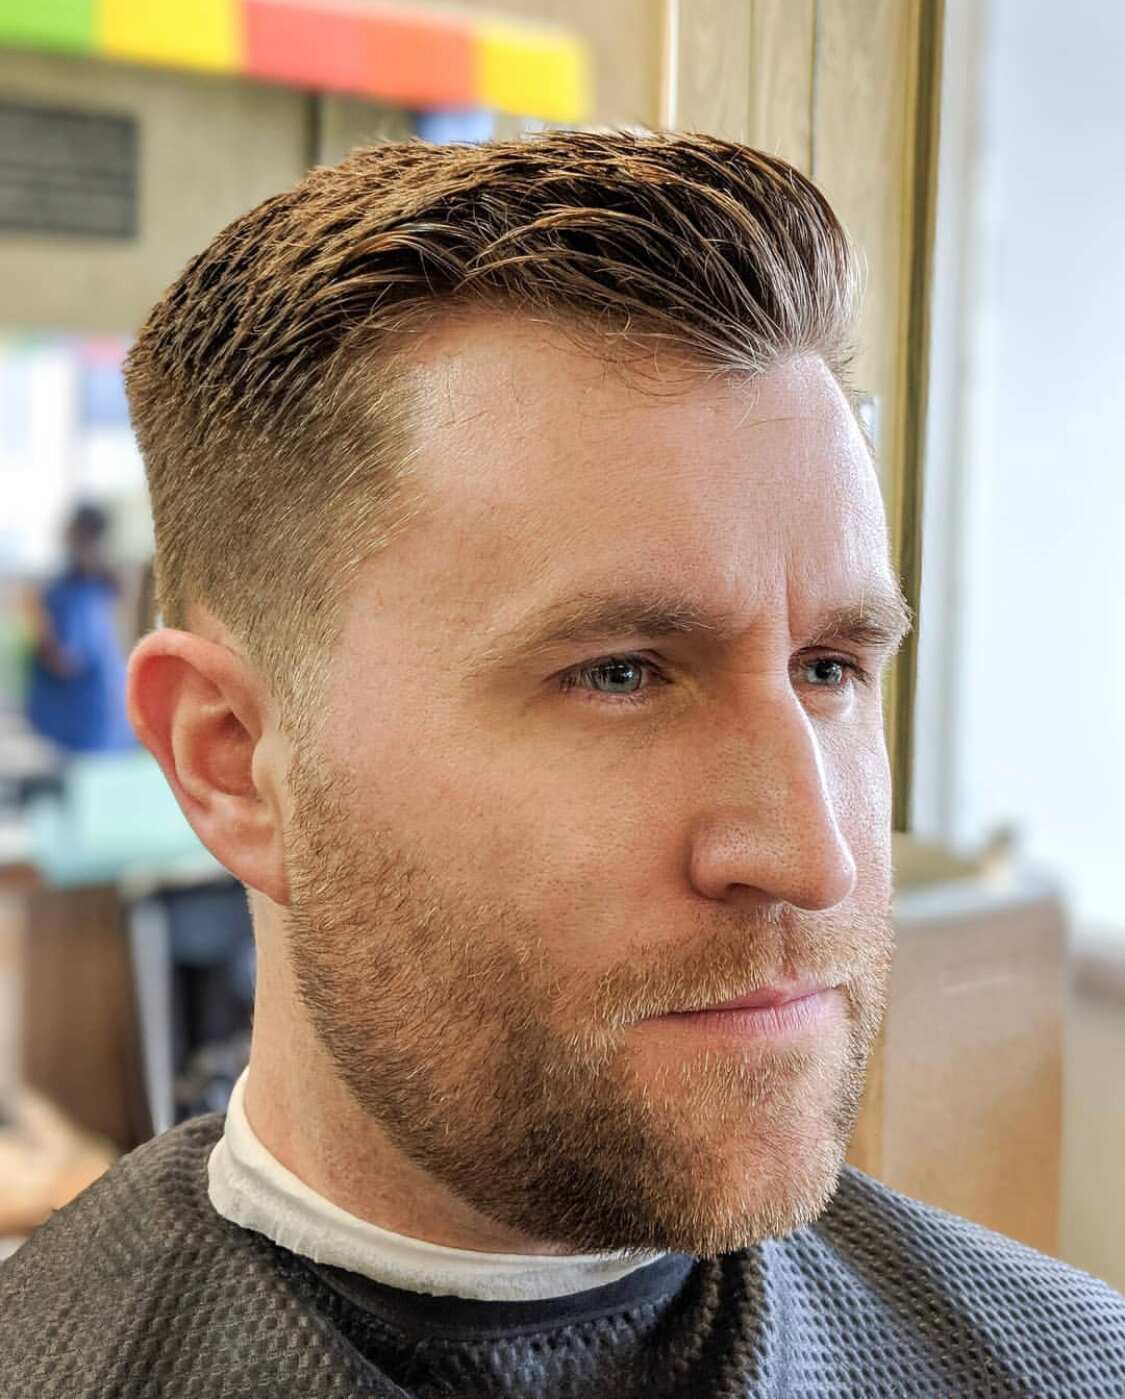 25 Ivy League haircut style ideas for men 